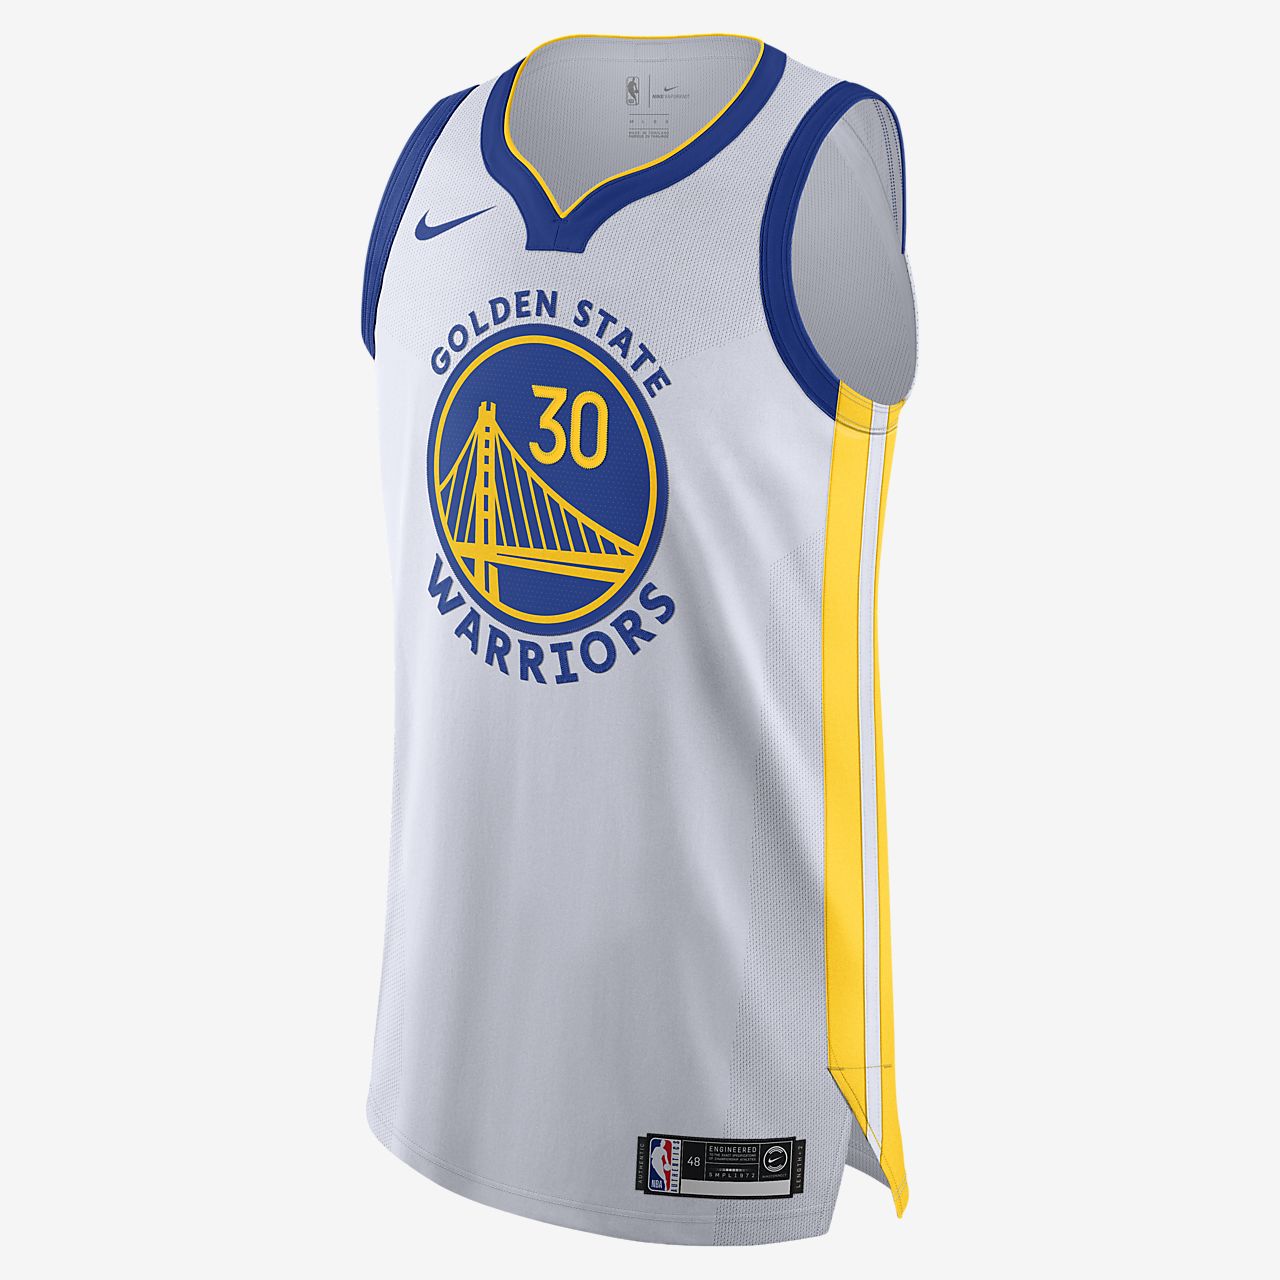 Stephen Curry Uniform NBA Golden State Warriors Stephen Curry Gold